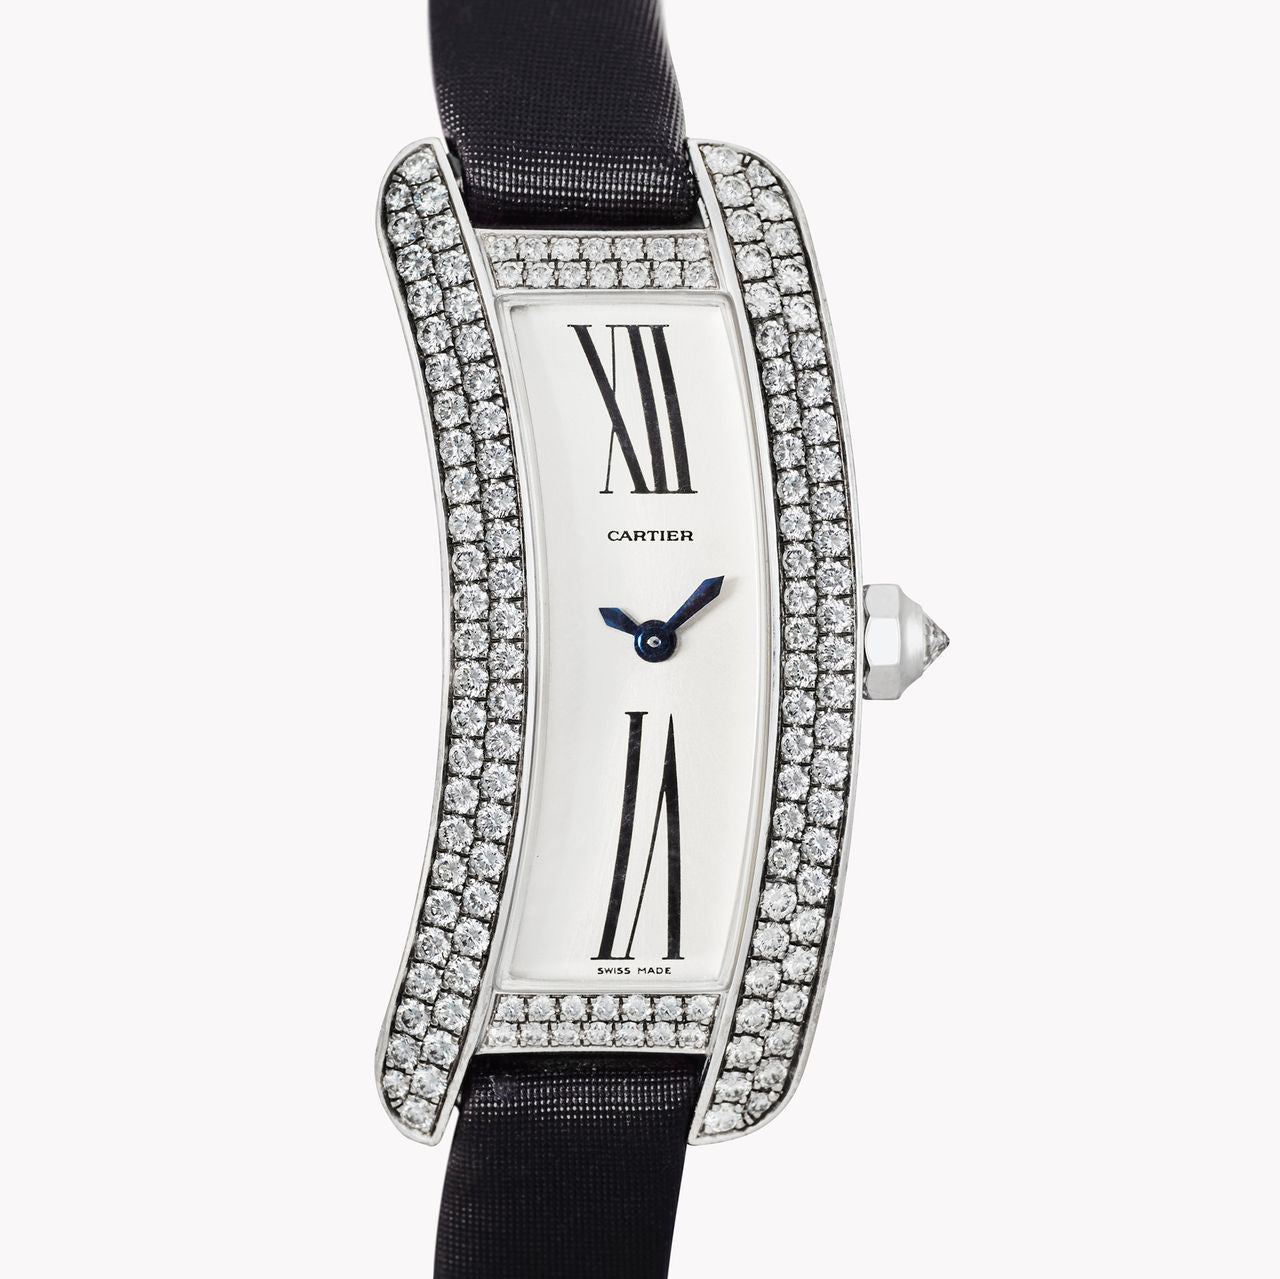 Cartier "Ballerine" with Pave Diamonds